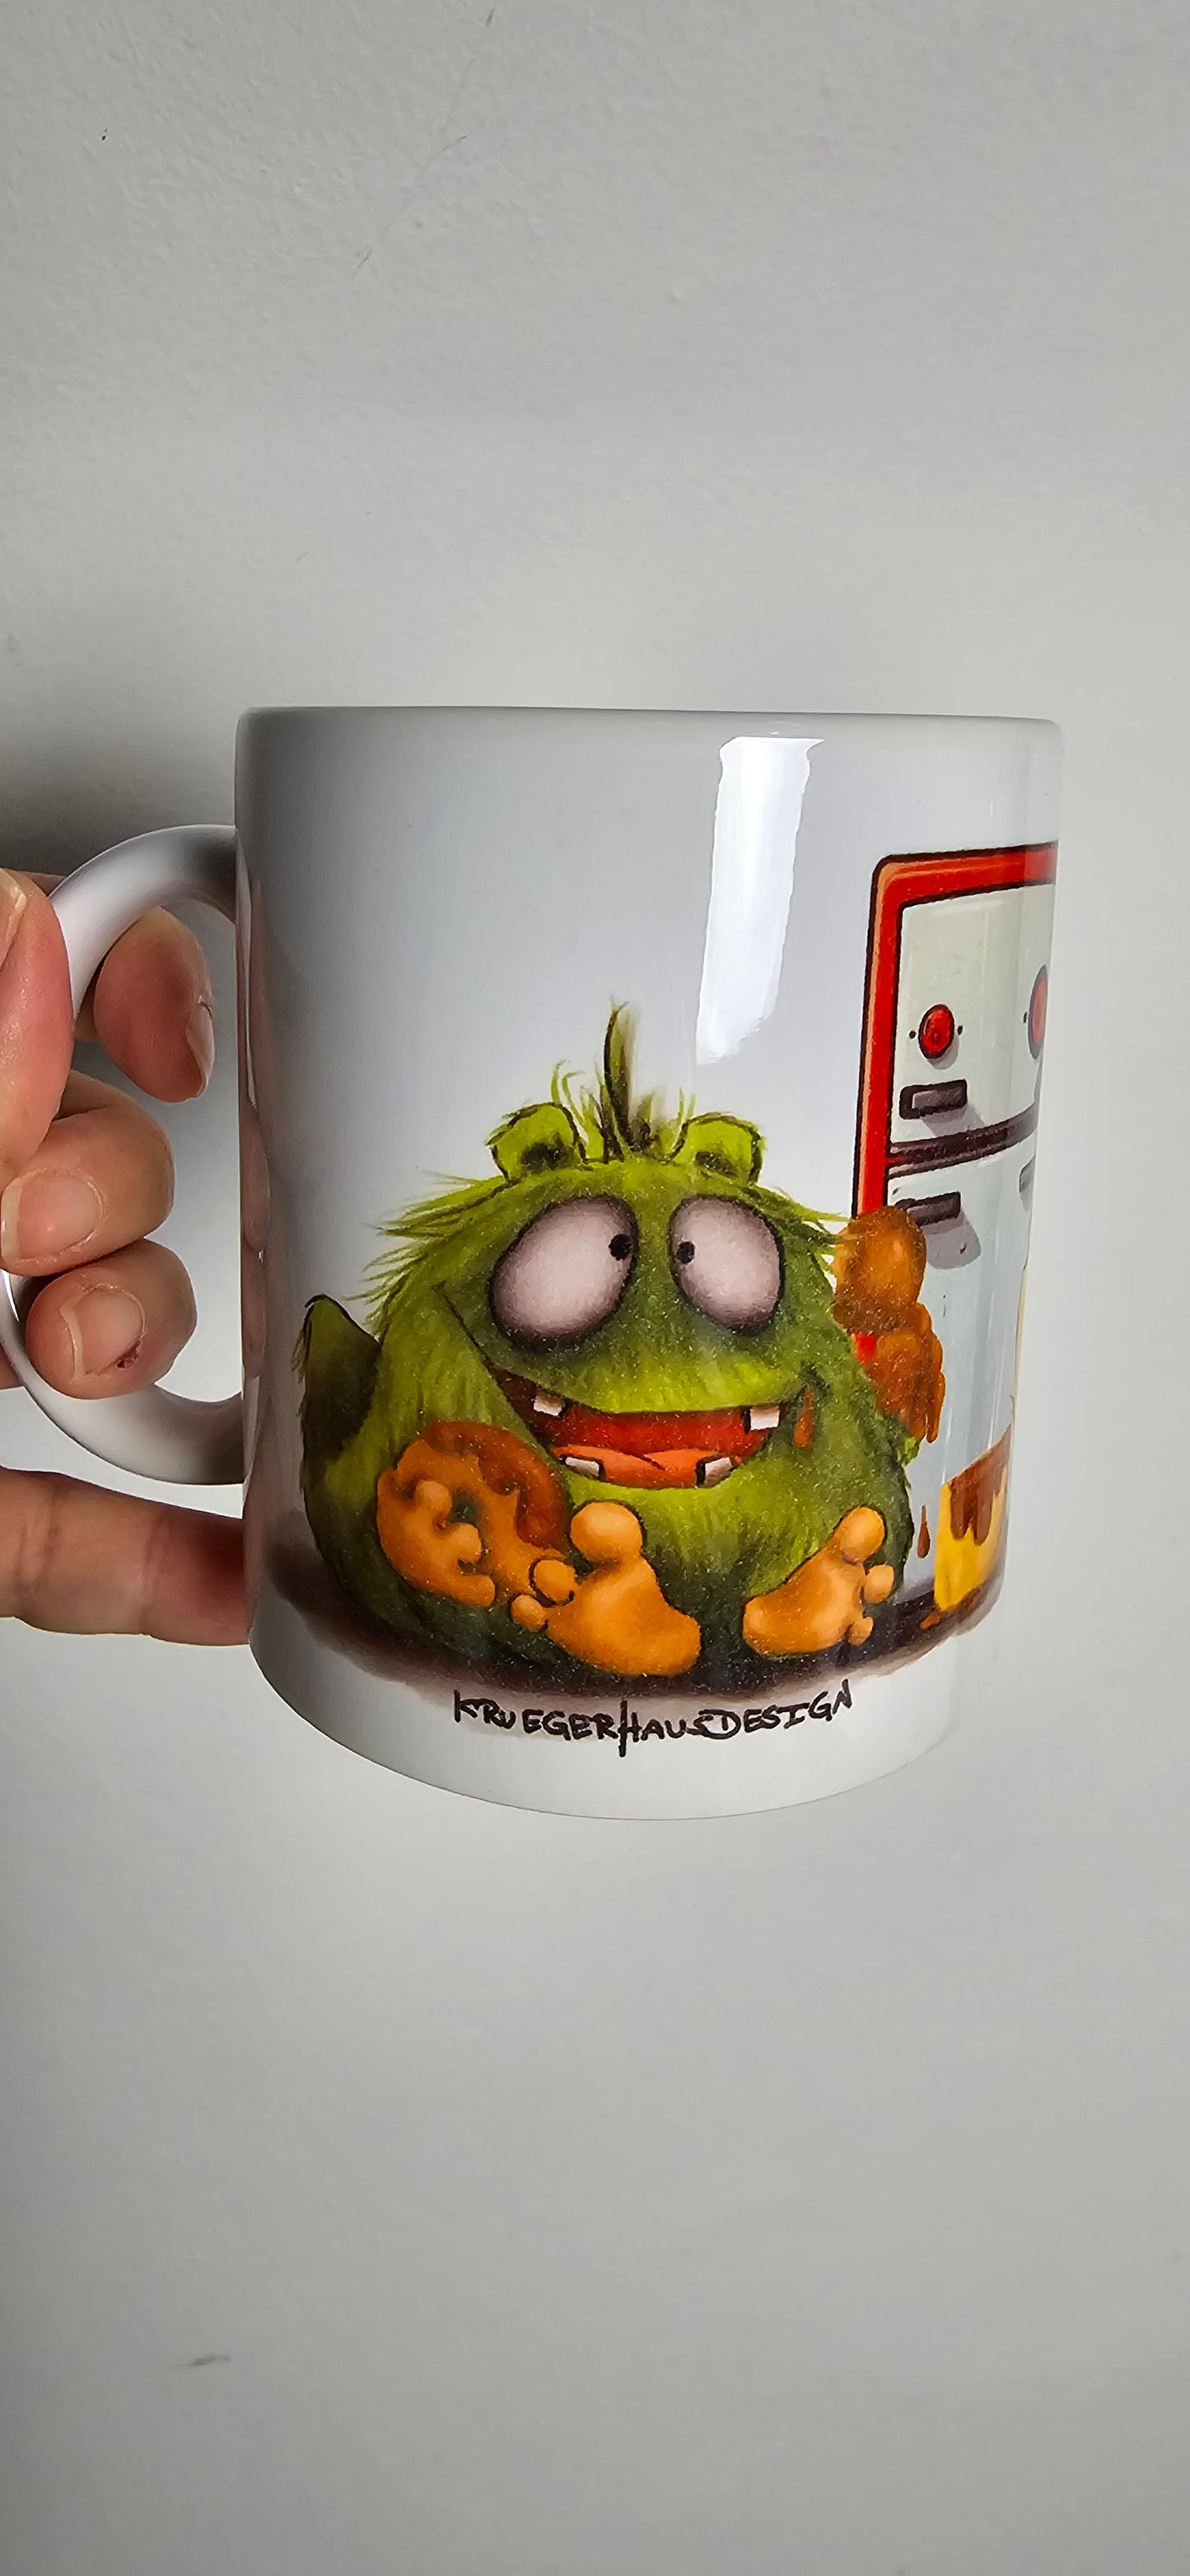 Muster Tasse, Kaffeetasse Kruegerhausdesign vielen Monstern den Fressies